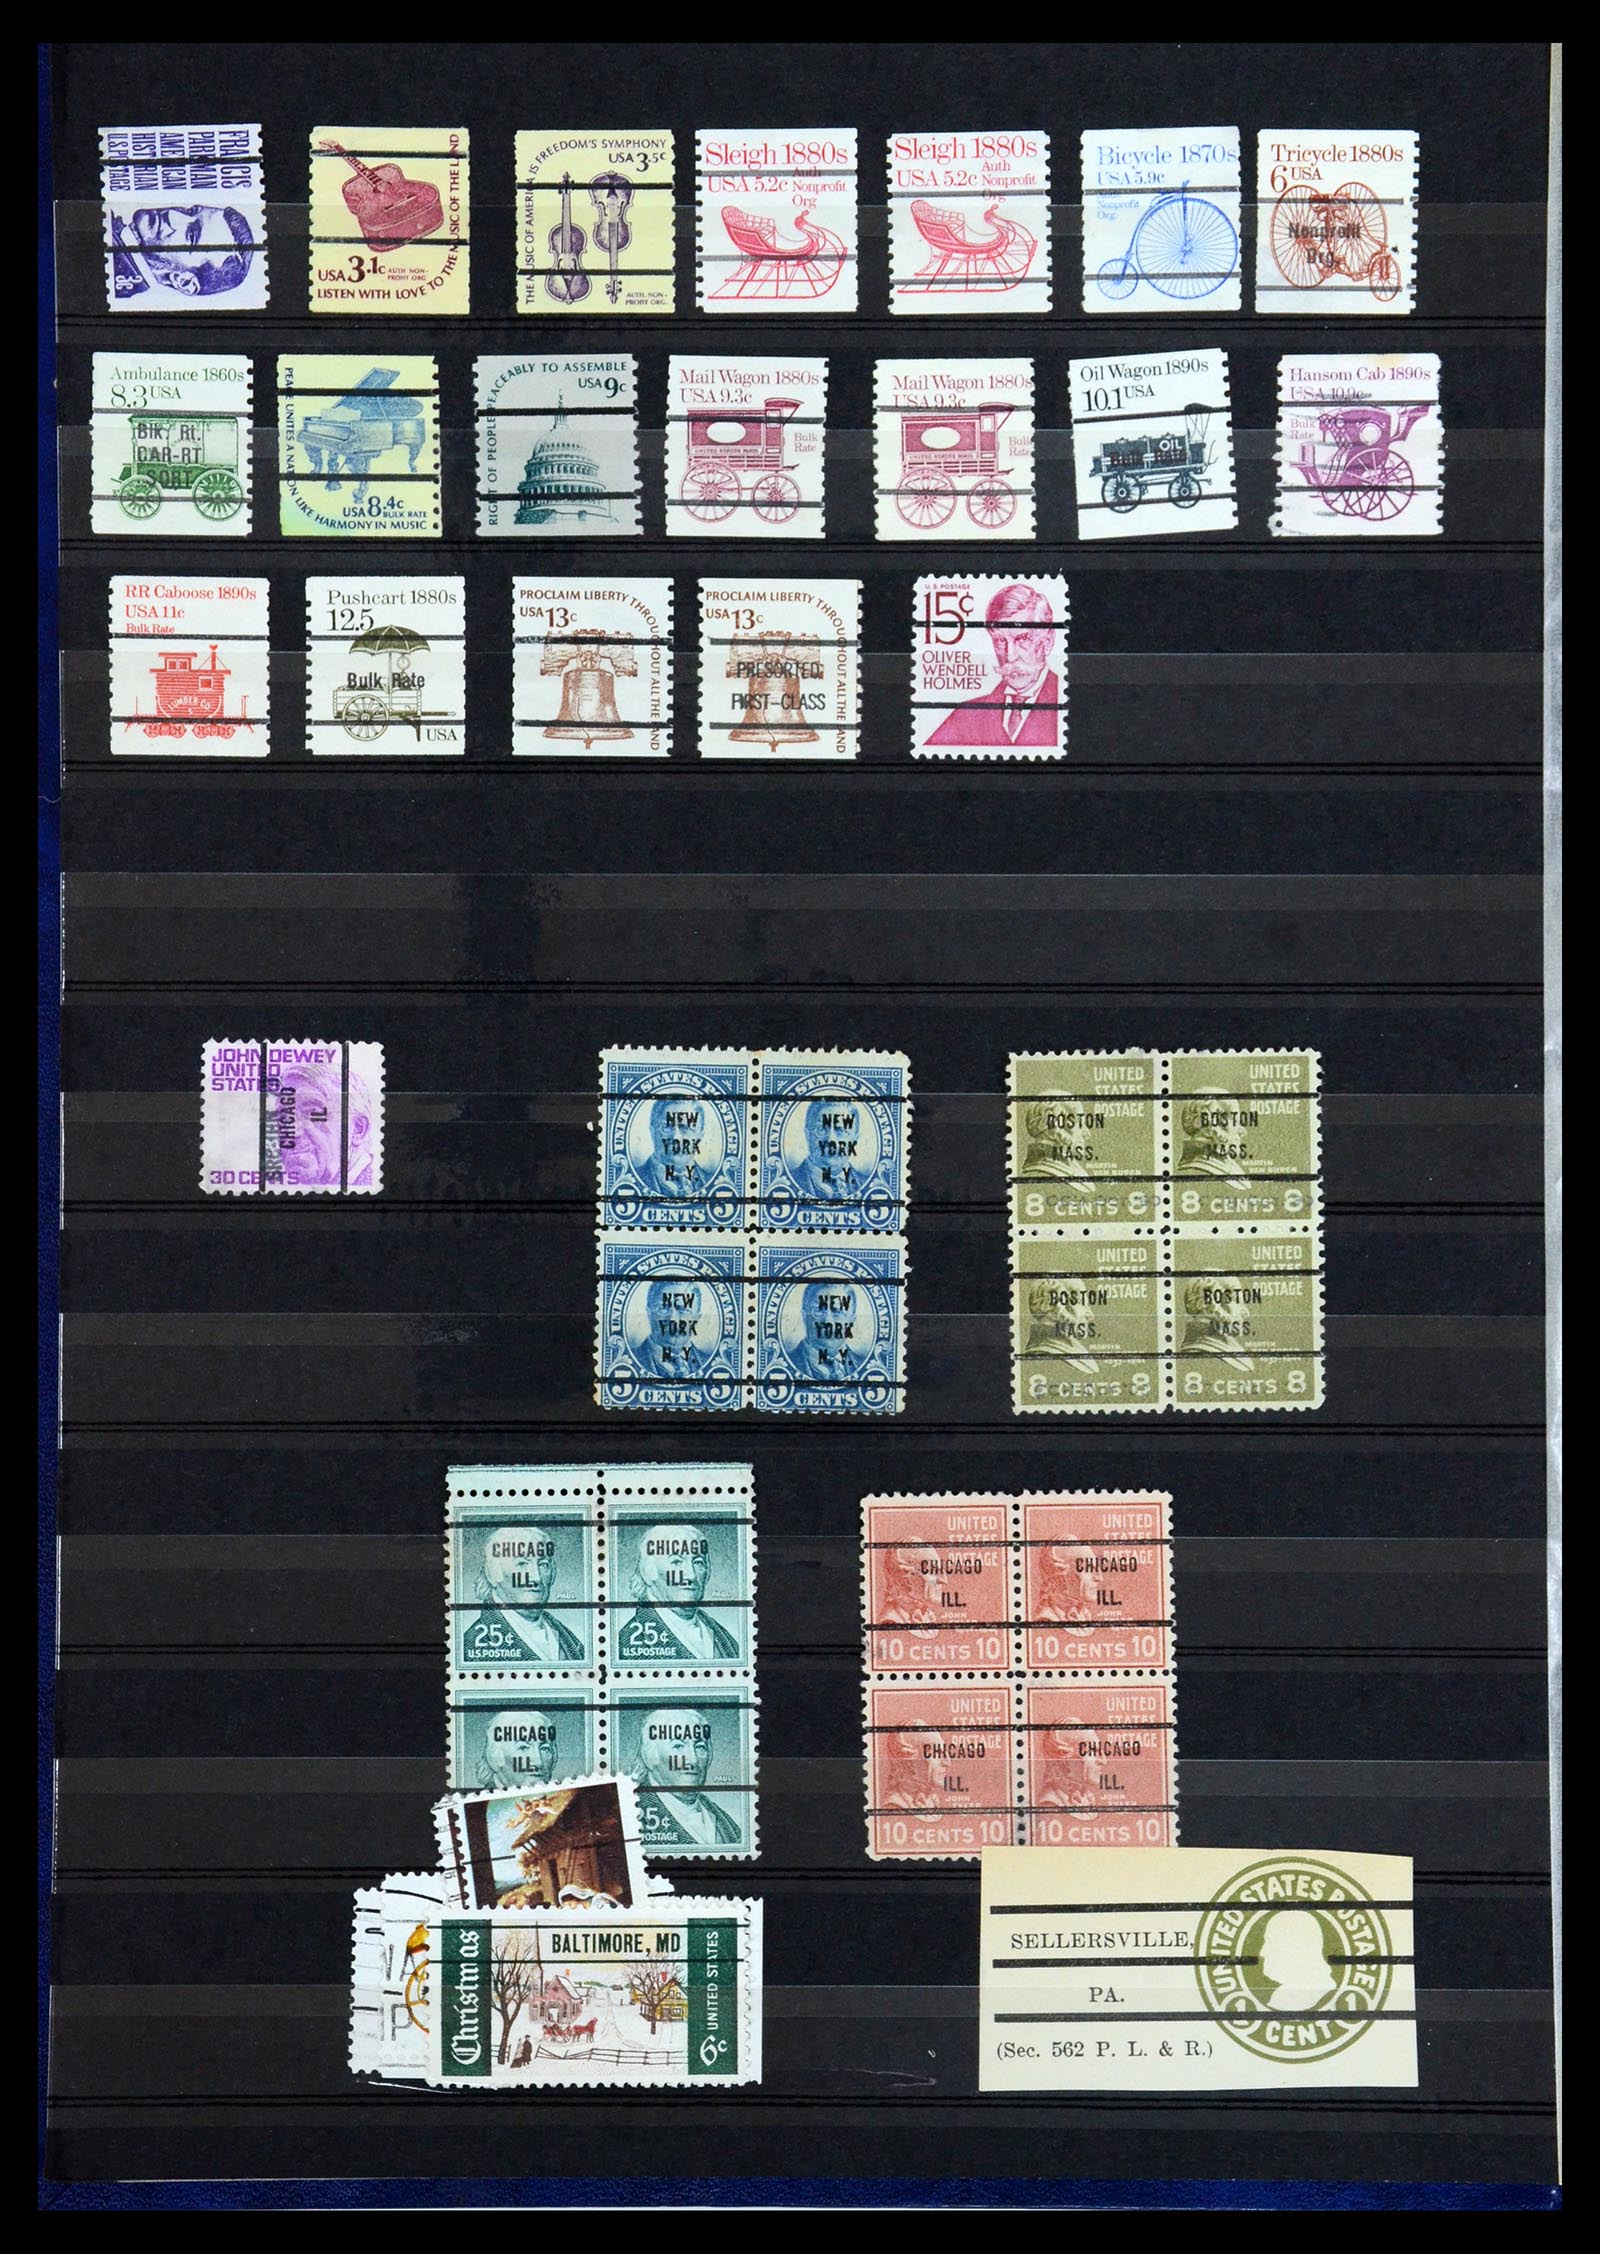 36382 033 - Stamp collection 36382 USA precancels.